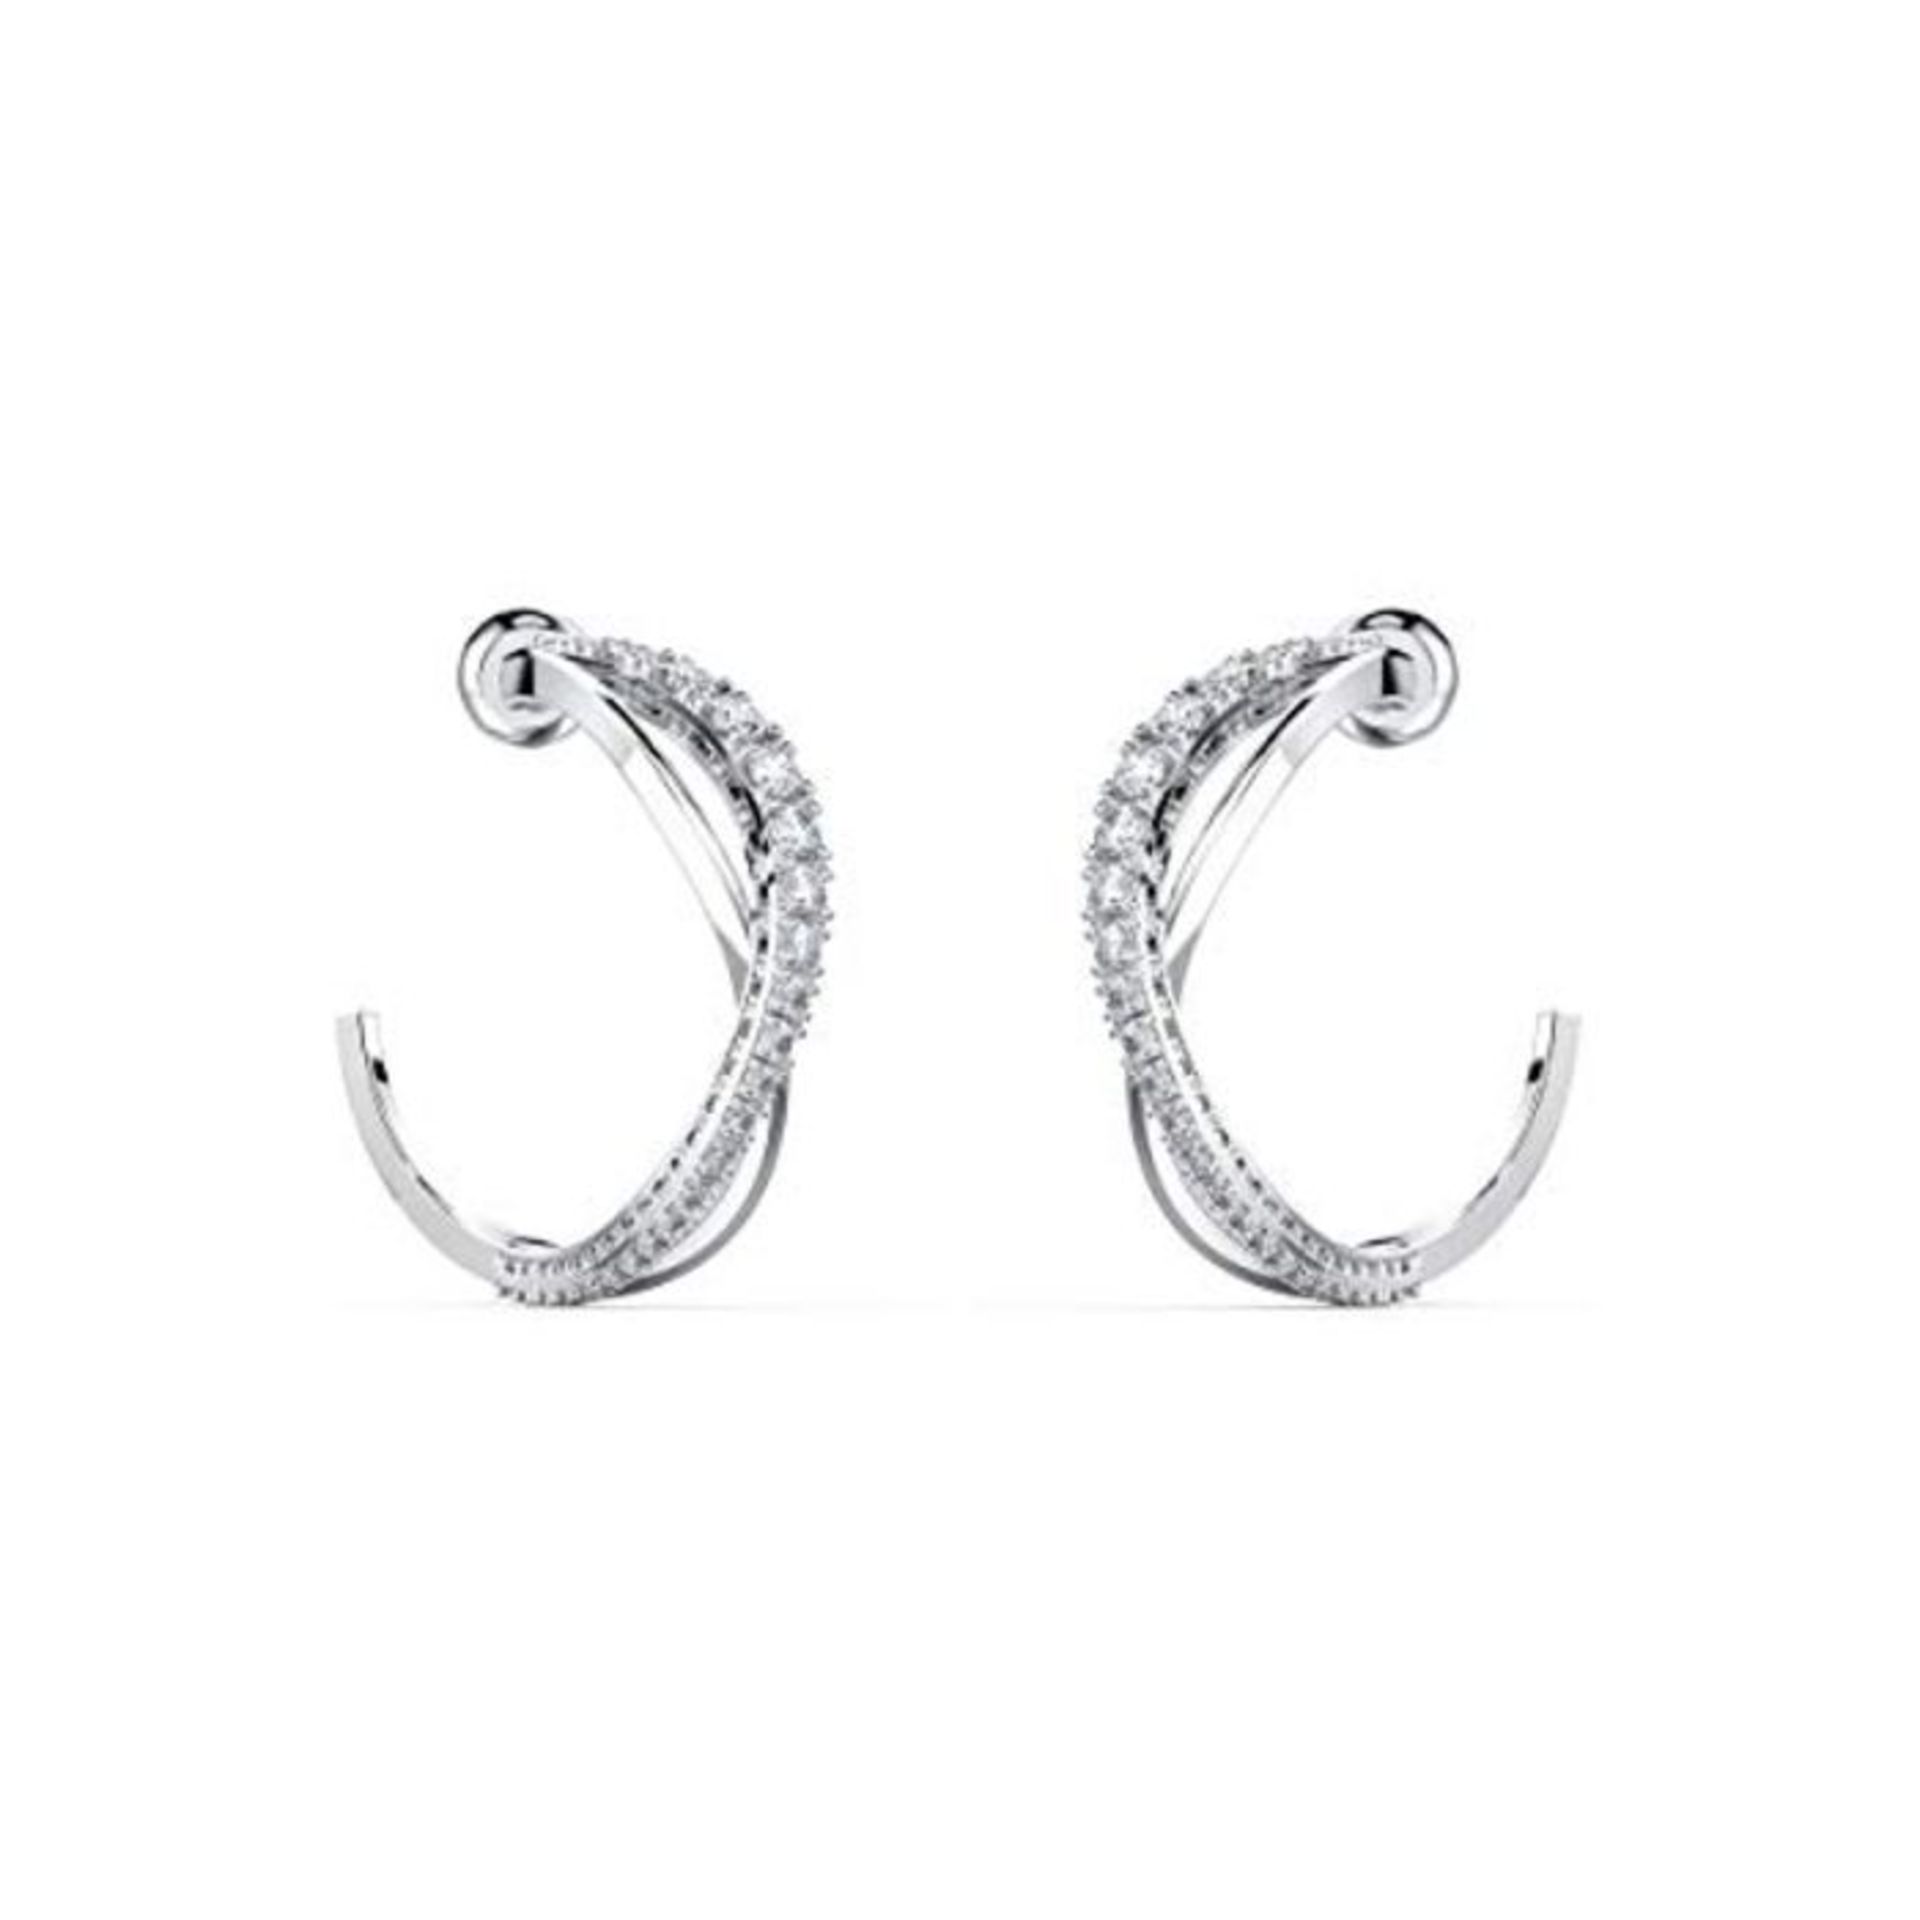 RRP £86.00 [CRACKED] Swarovski Women's Twist Hoop Pierced Earrings Set of Brilliant White Crystal